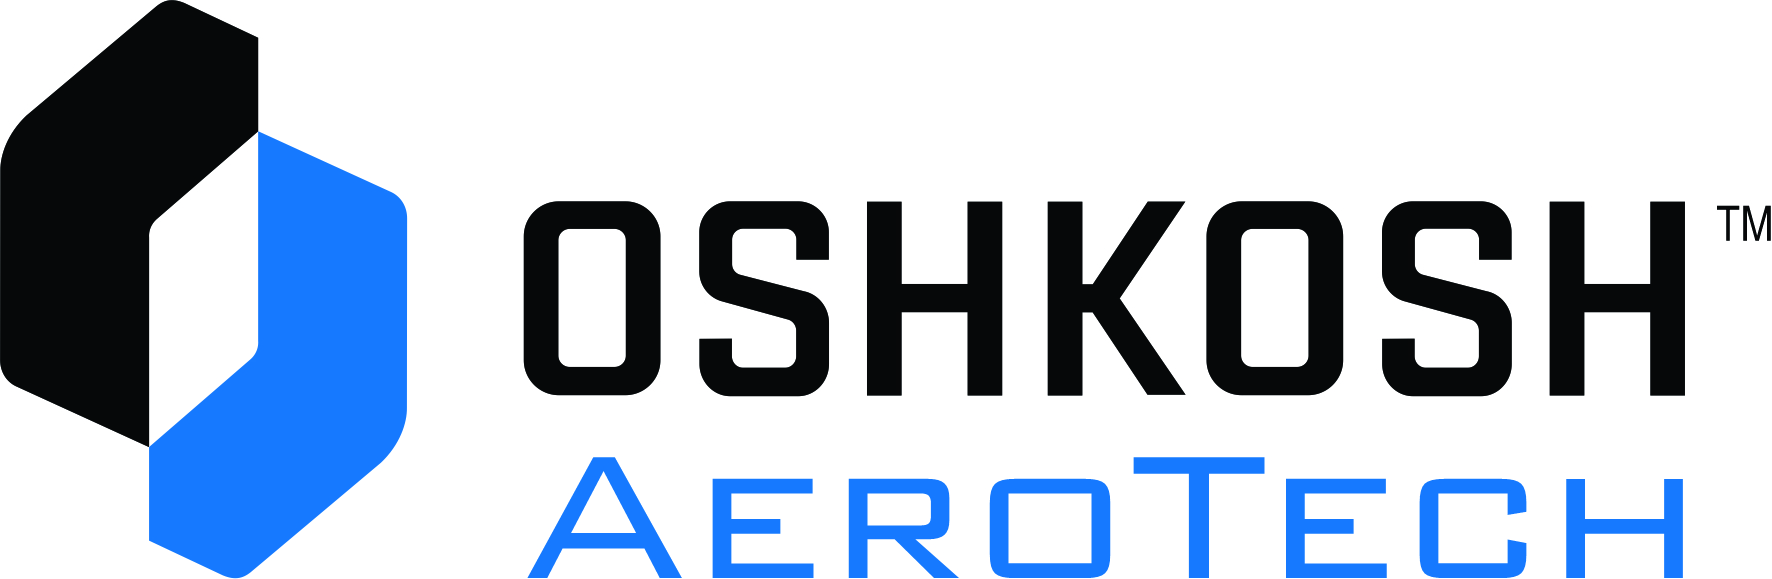 Offizielle Oshkosh AeroTech Logo Farbe